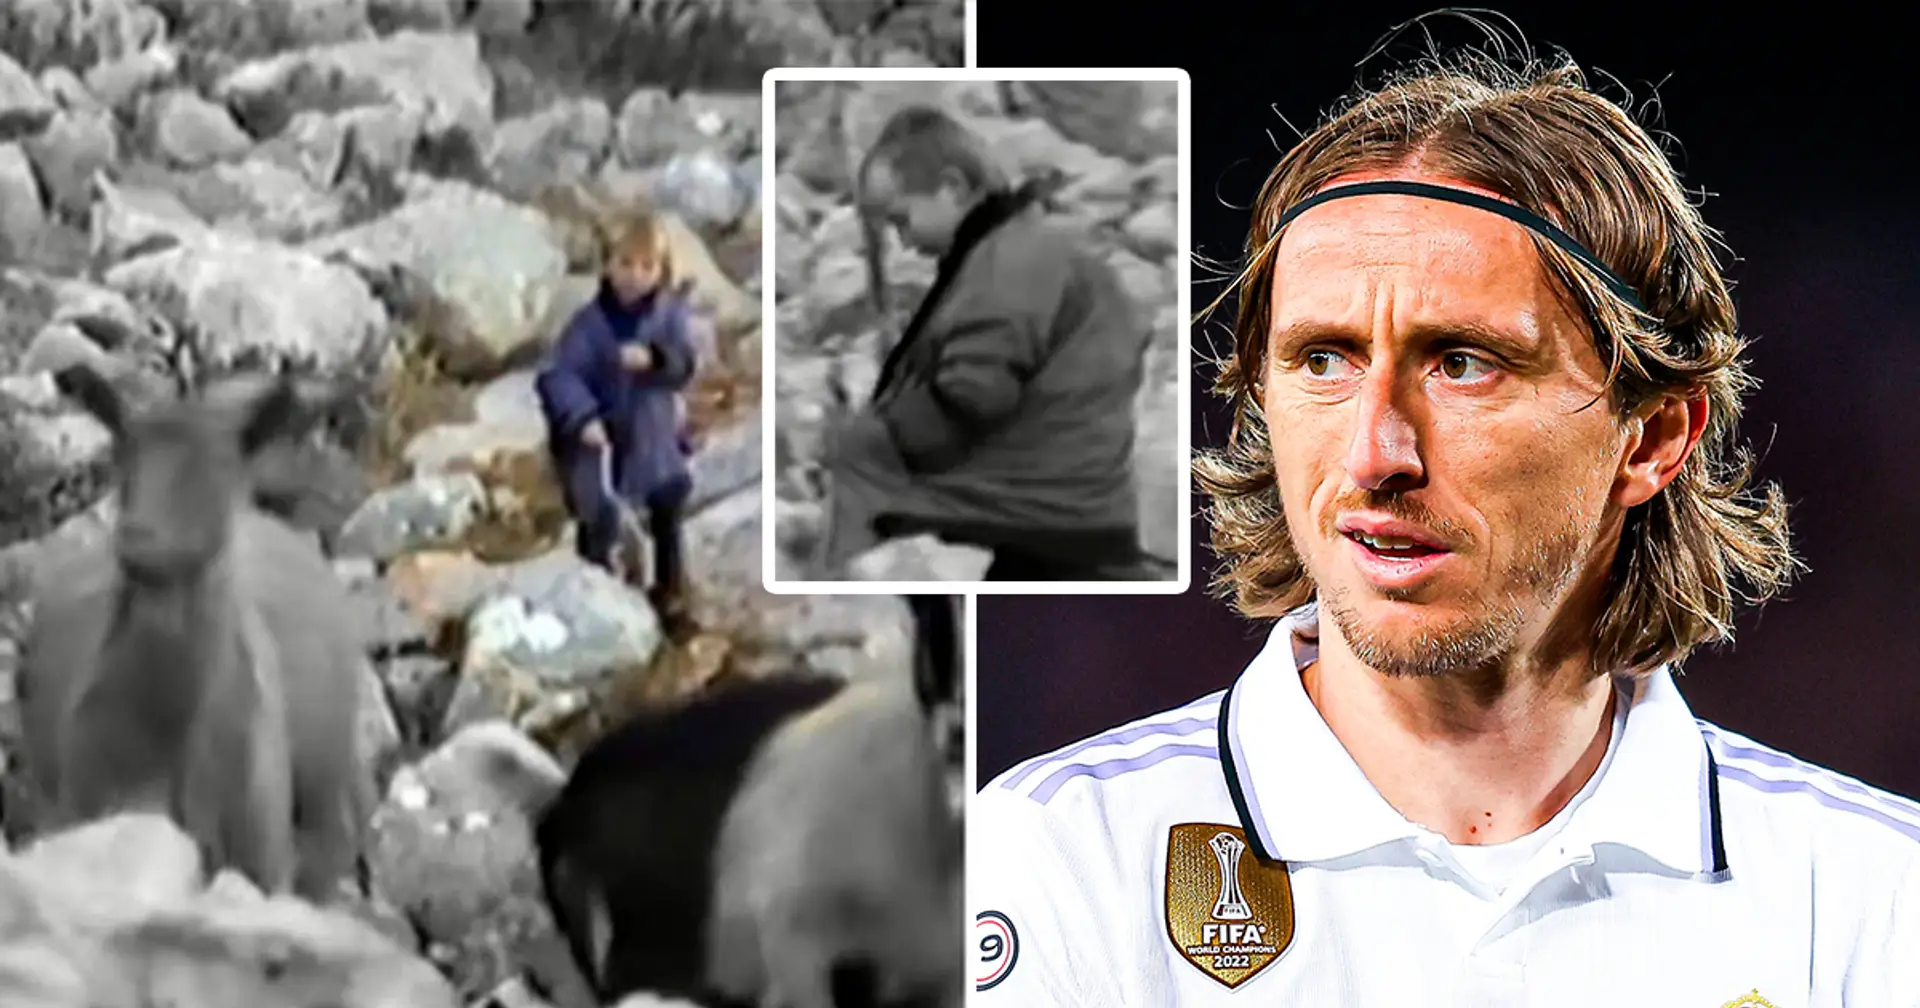 Rare footage of a 5-year-old Luka Modric herding goats in Croatia